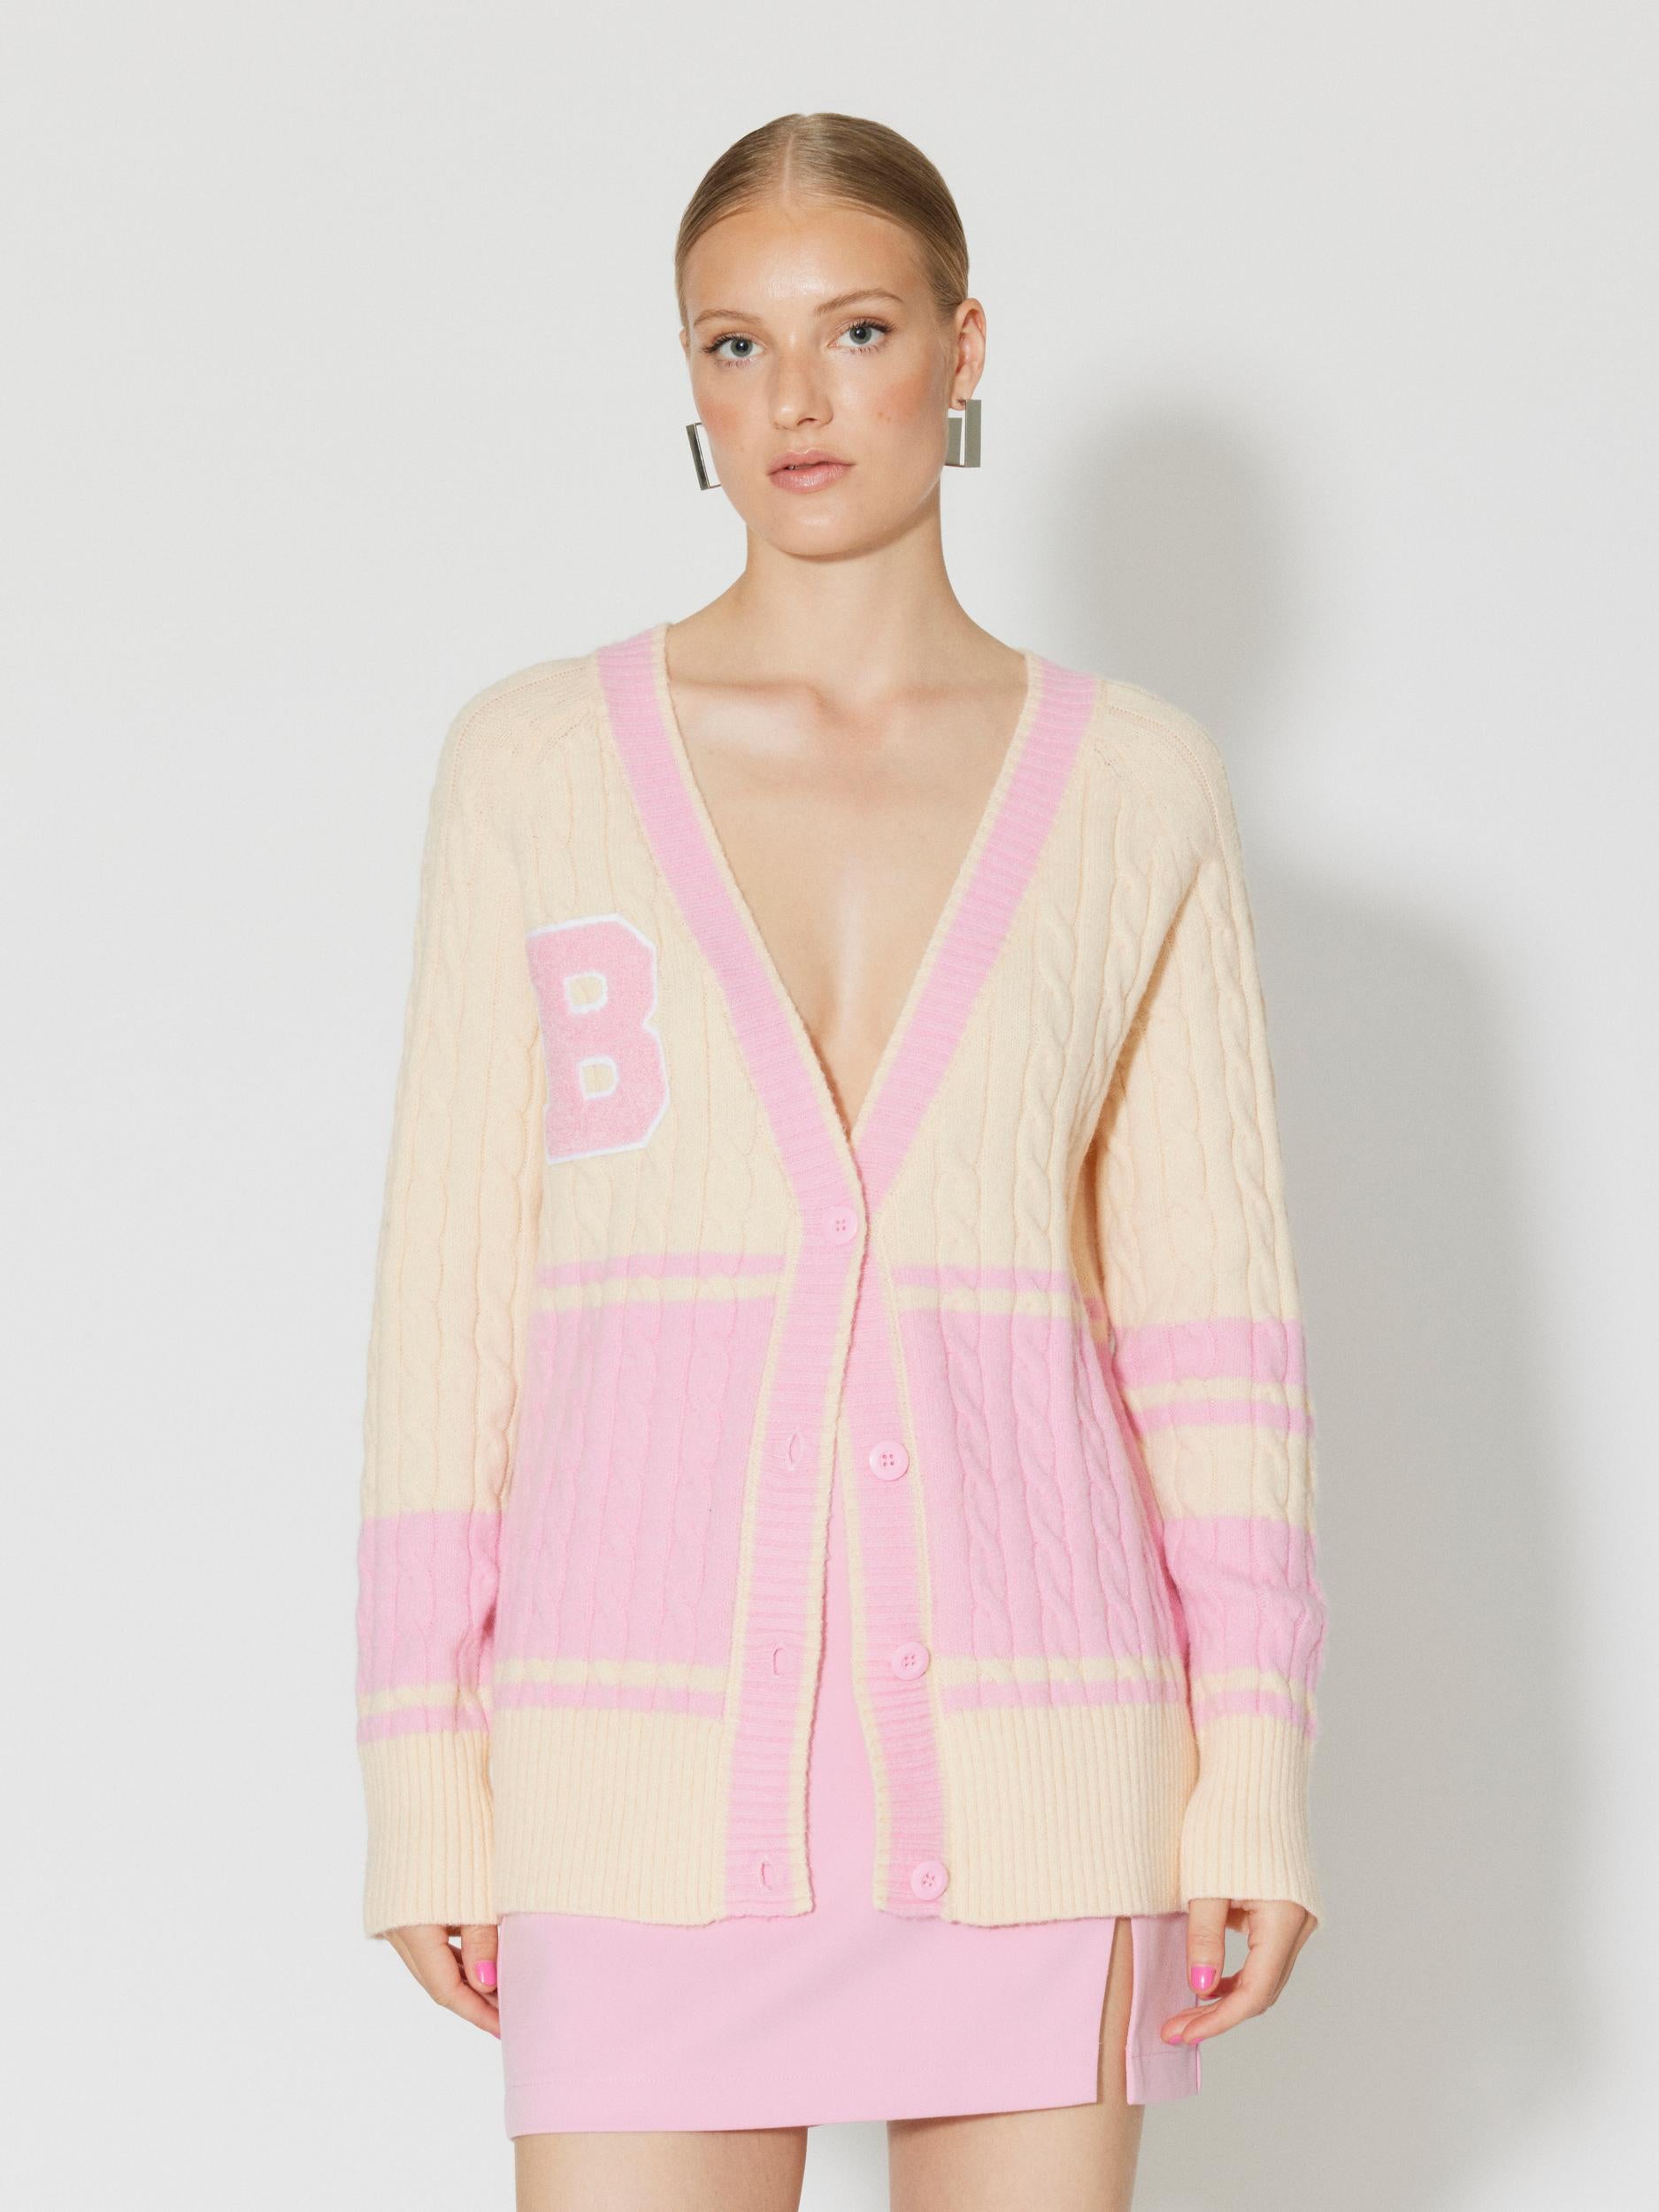 Something New cardigan in maglia bicolor rosa e panna<BR/>